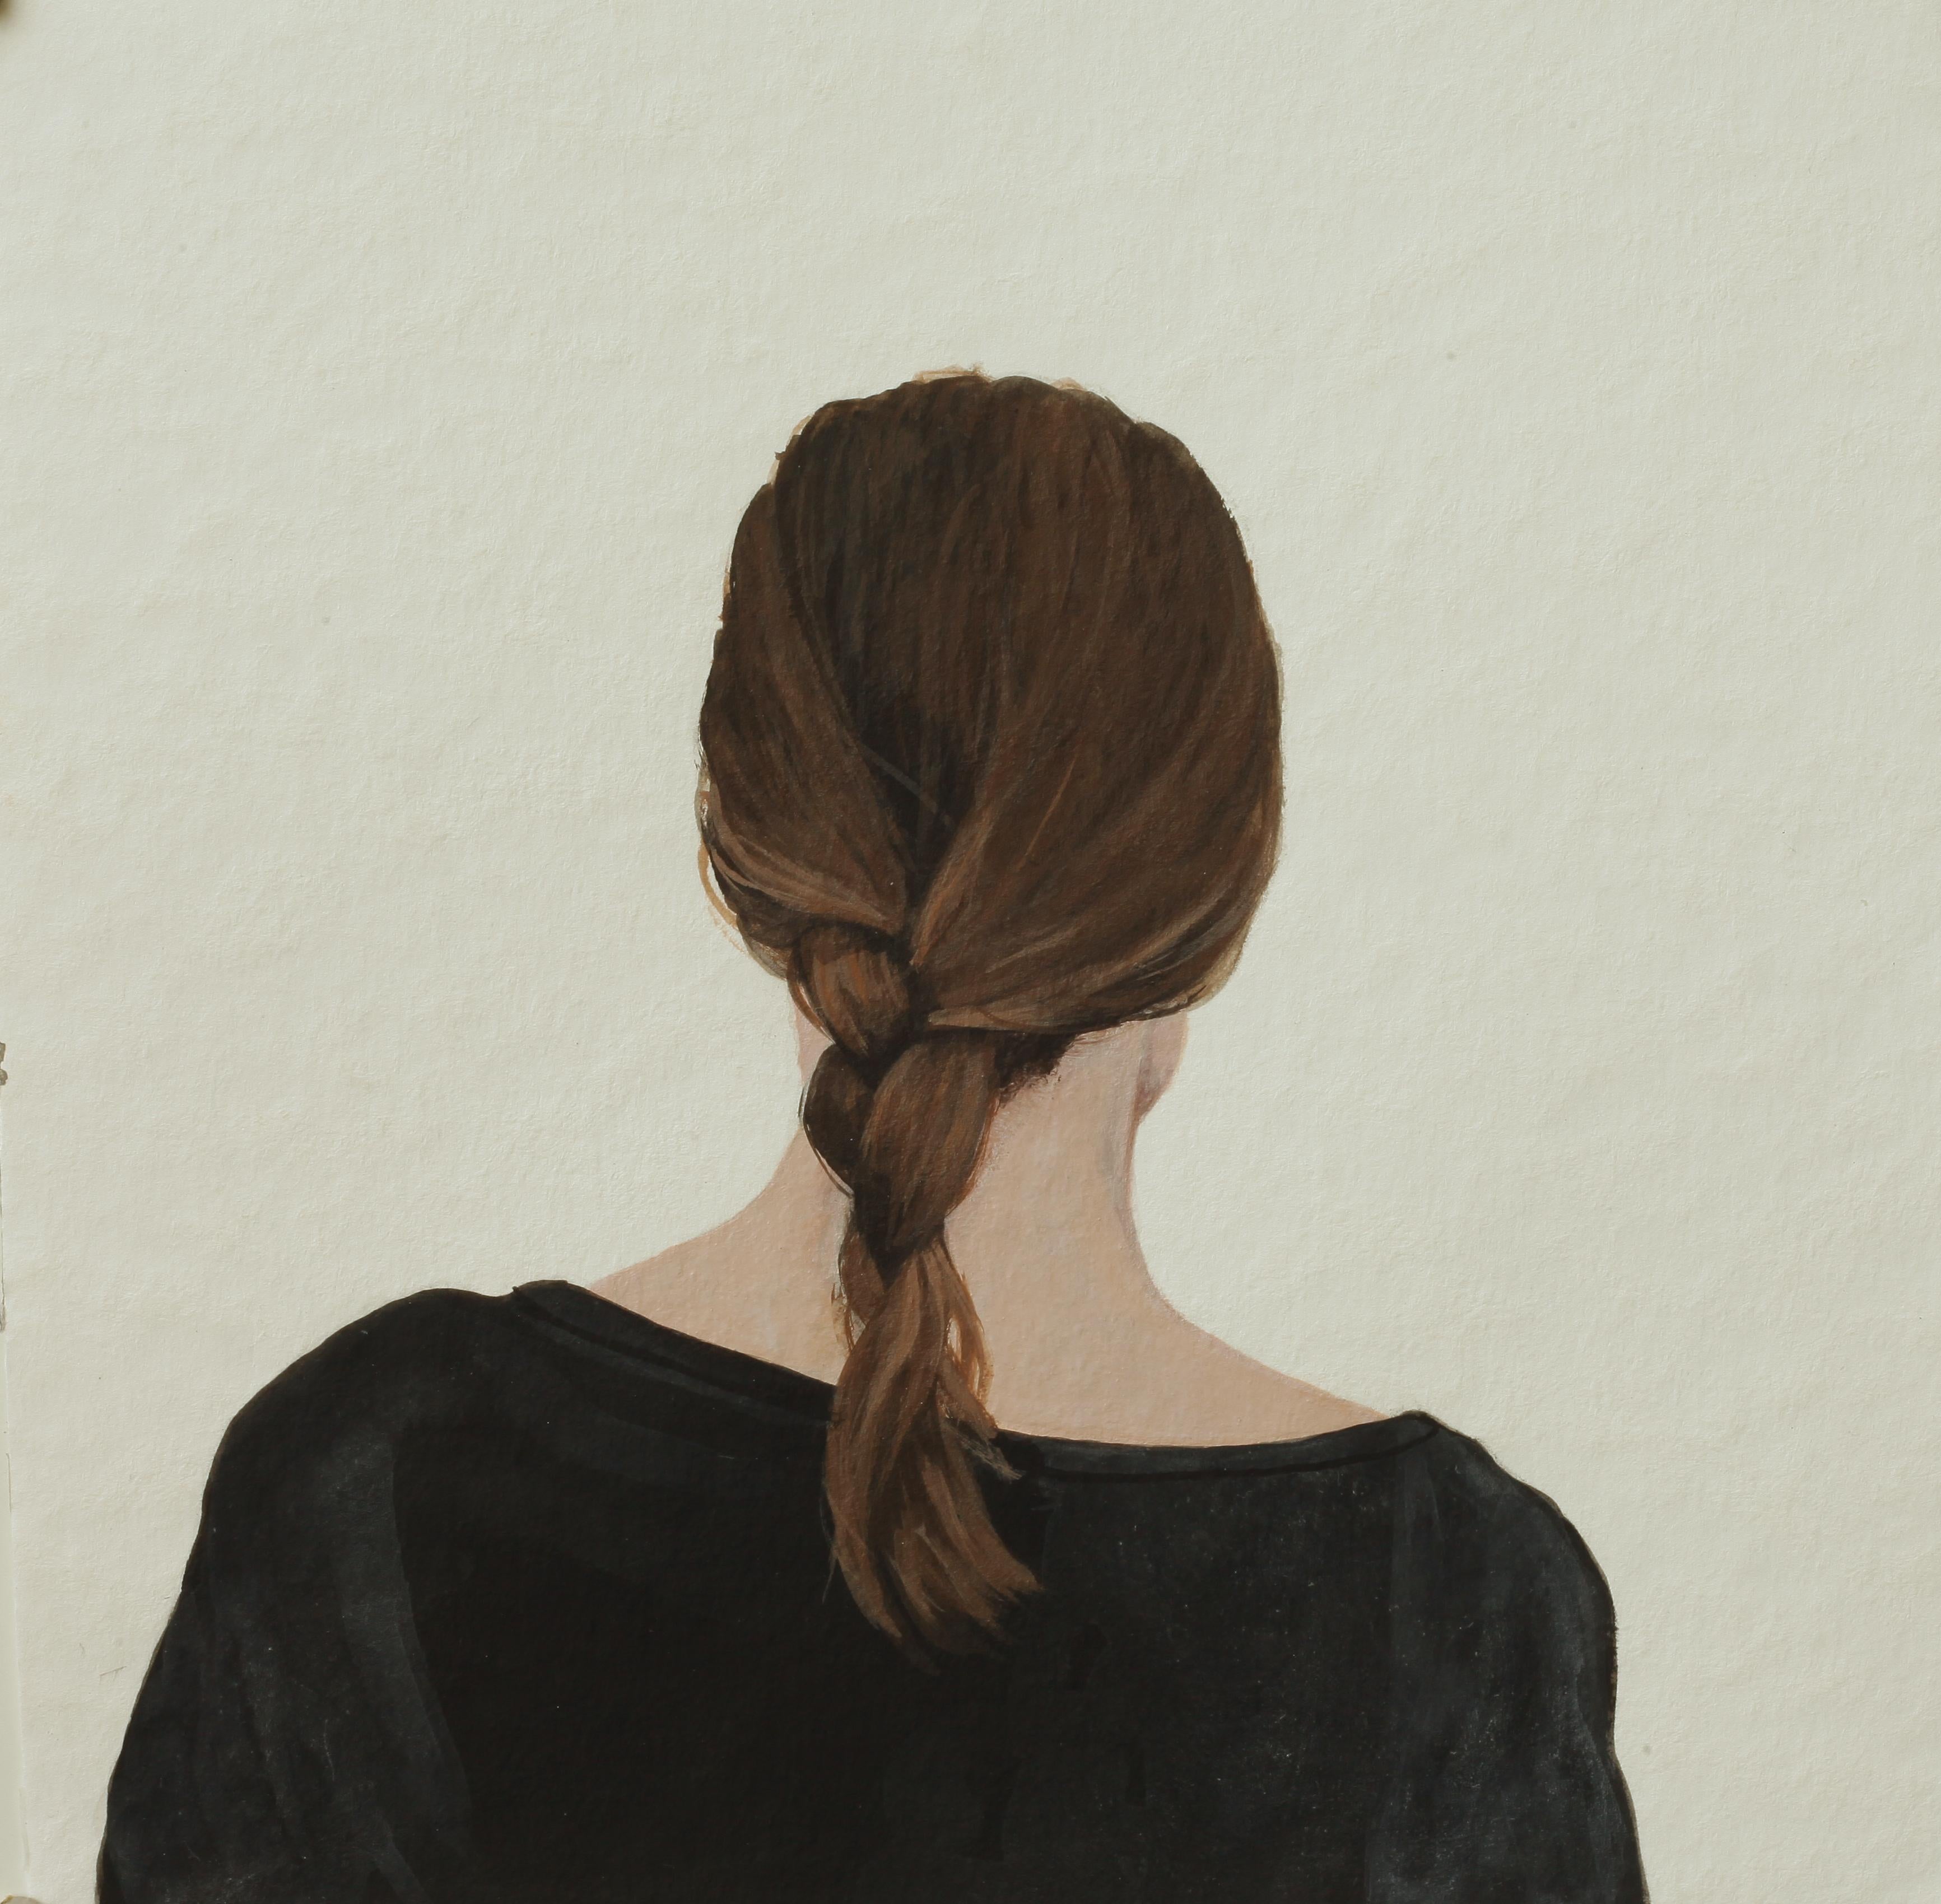 Karoline Kroiss Figurative Painting - "Back Portrait VII" Contemporary Portrait Painting of a Girl